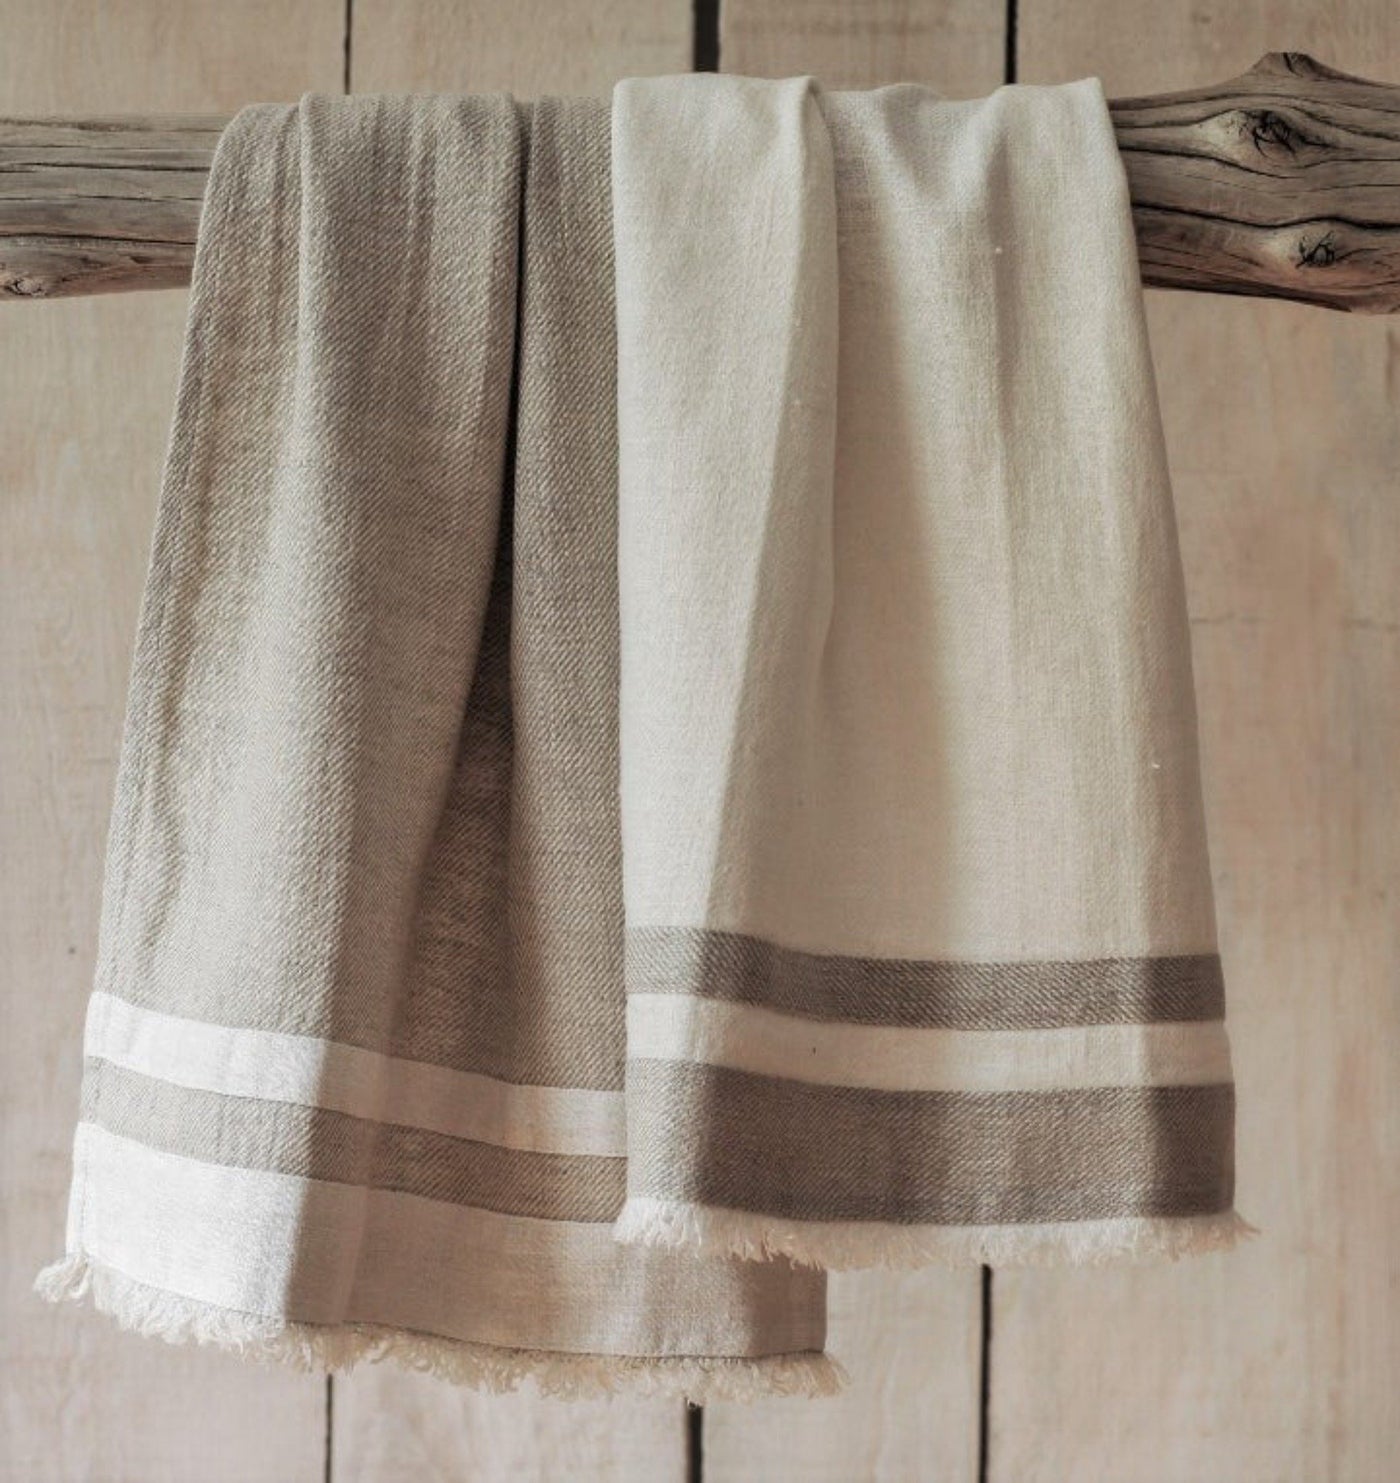 Lipari Linen Towels hung on driftwood. Beige and white towels.